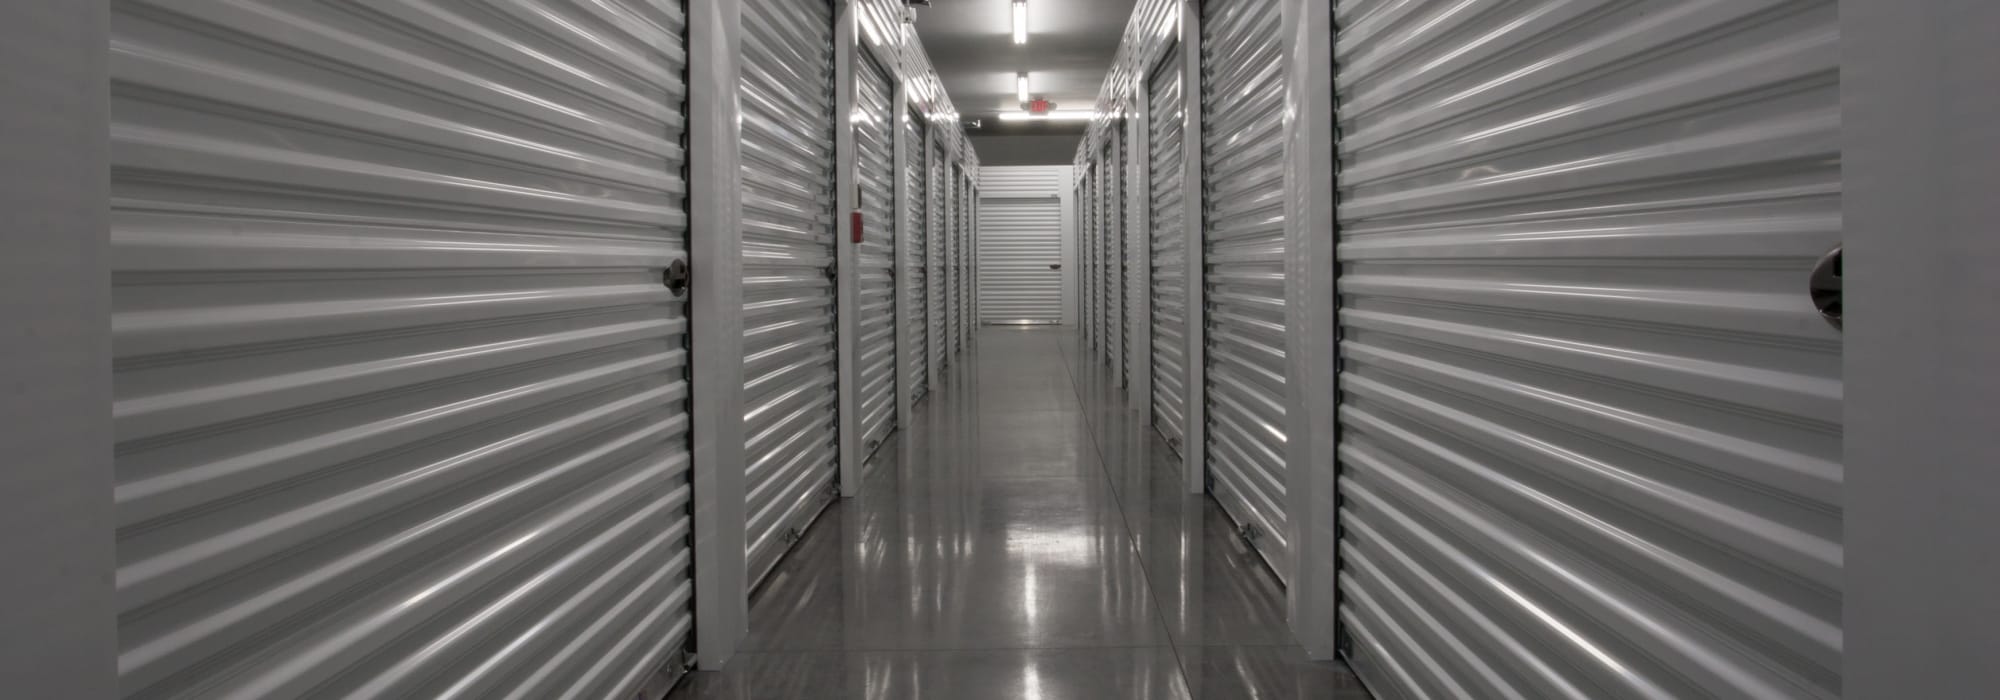 Self storage at Overton Road Self Storage in Birmingham, Alabama